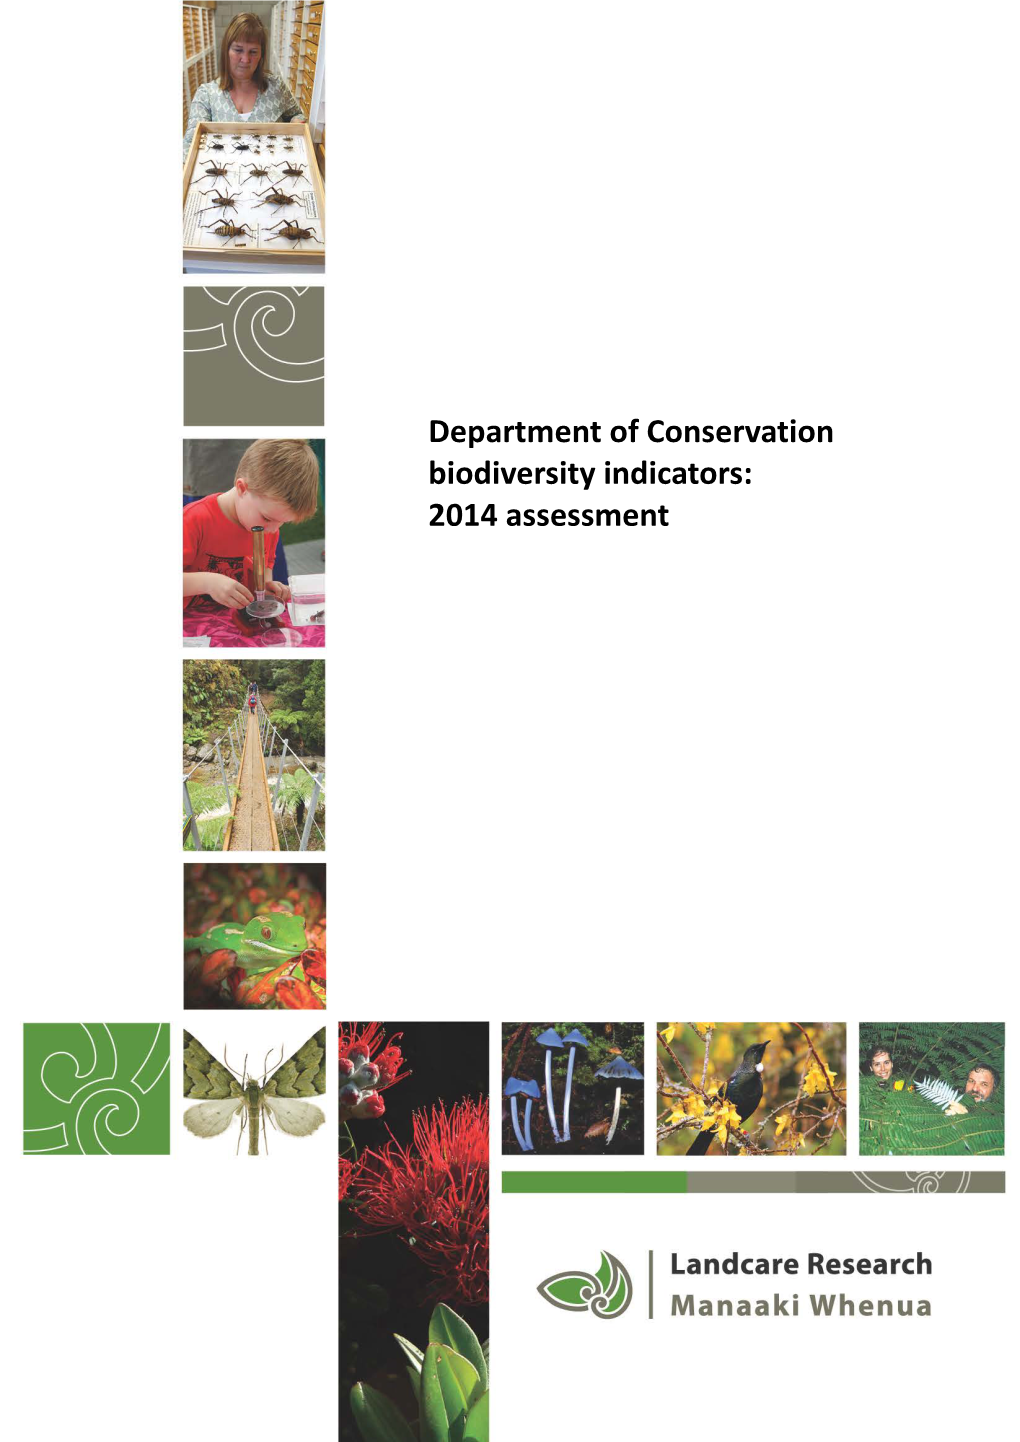 Department of Conservation Biodiversity Indicators: 2014 Assessment